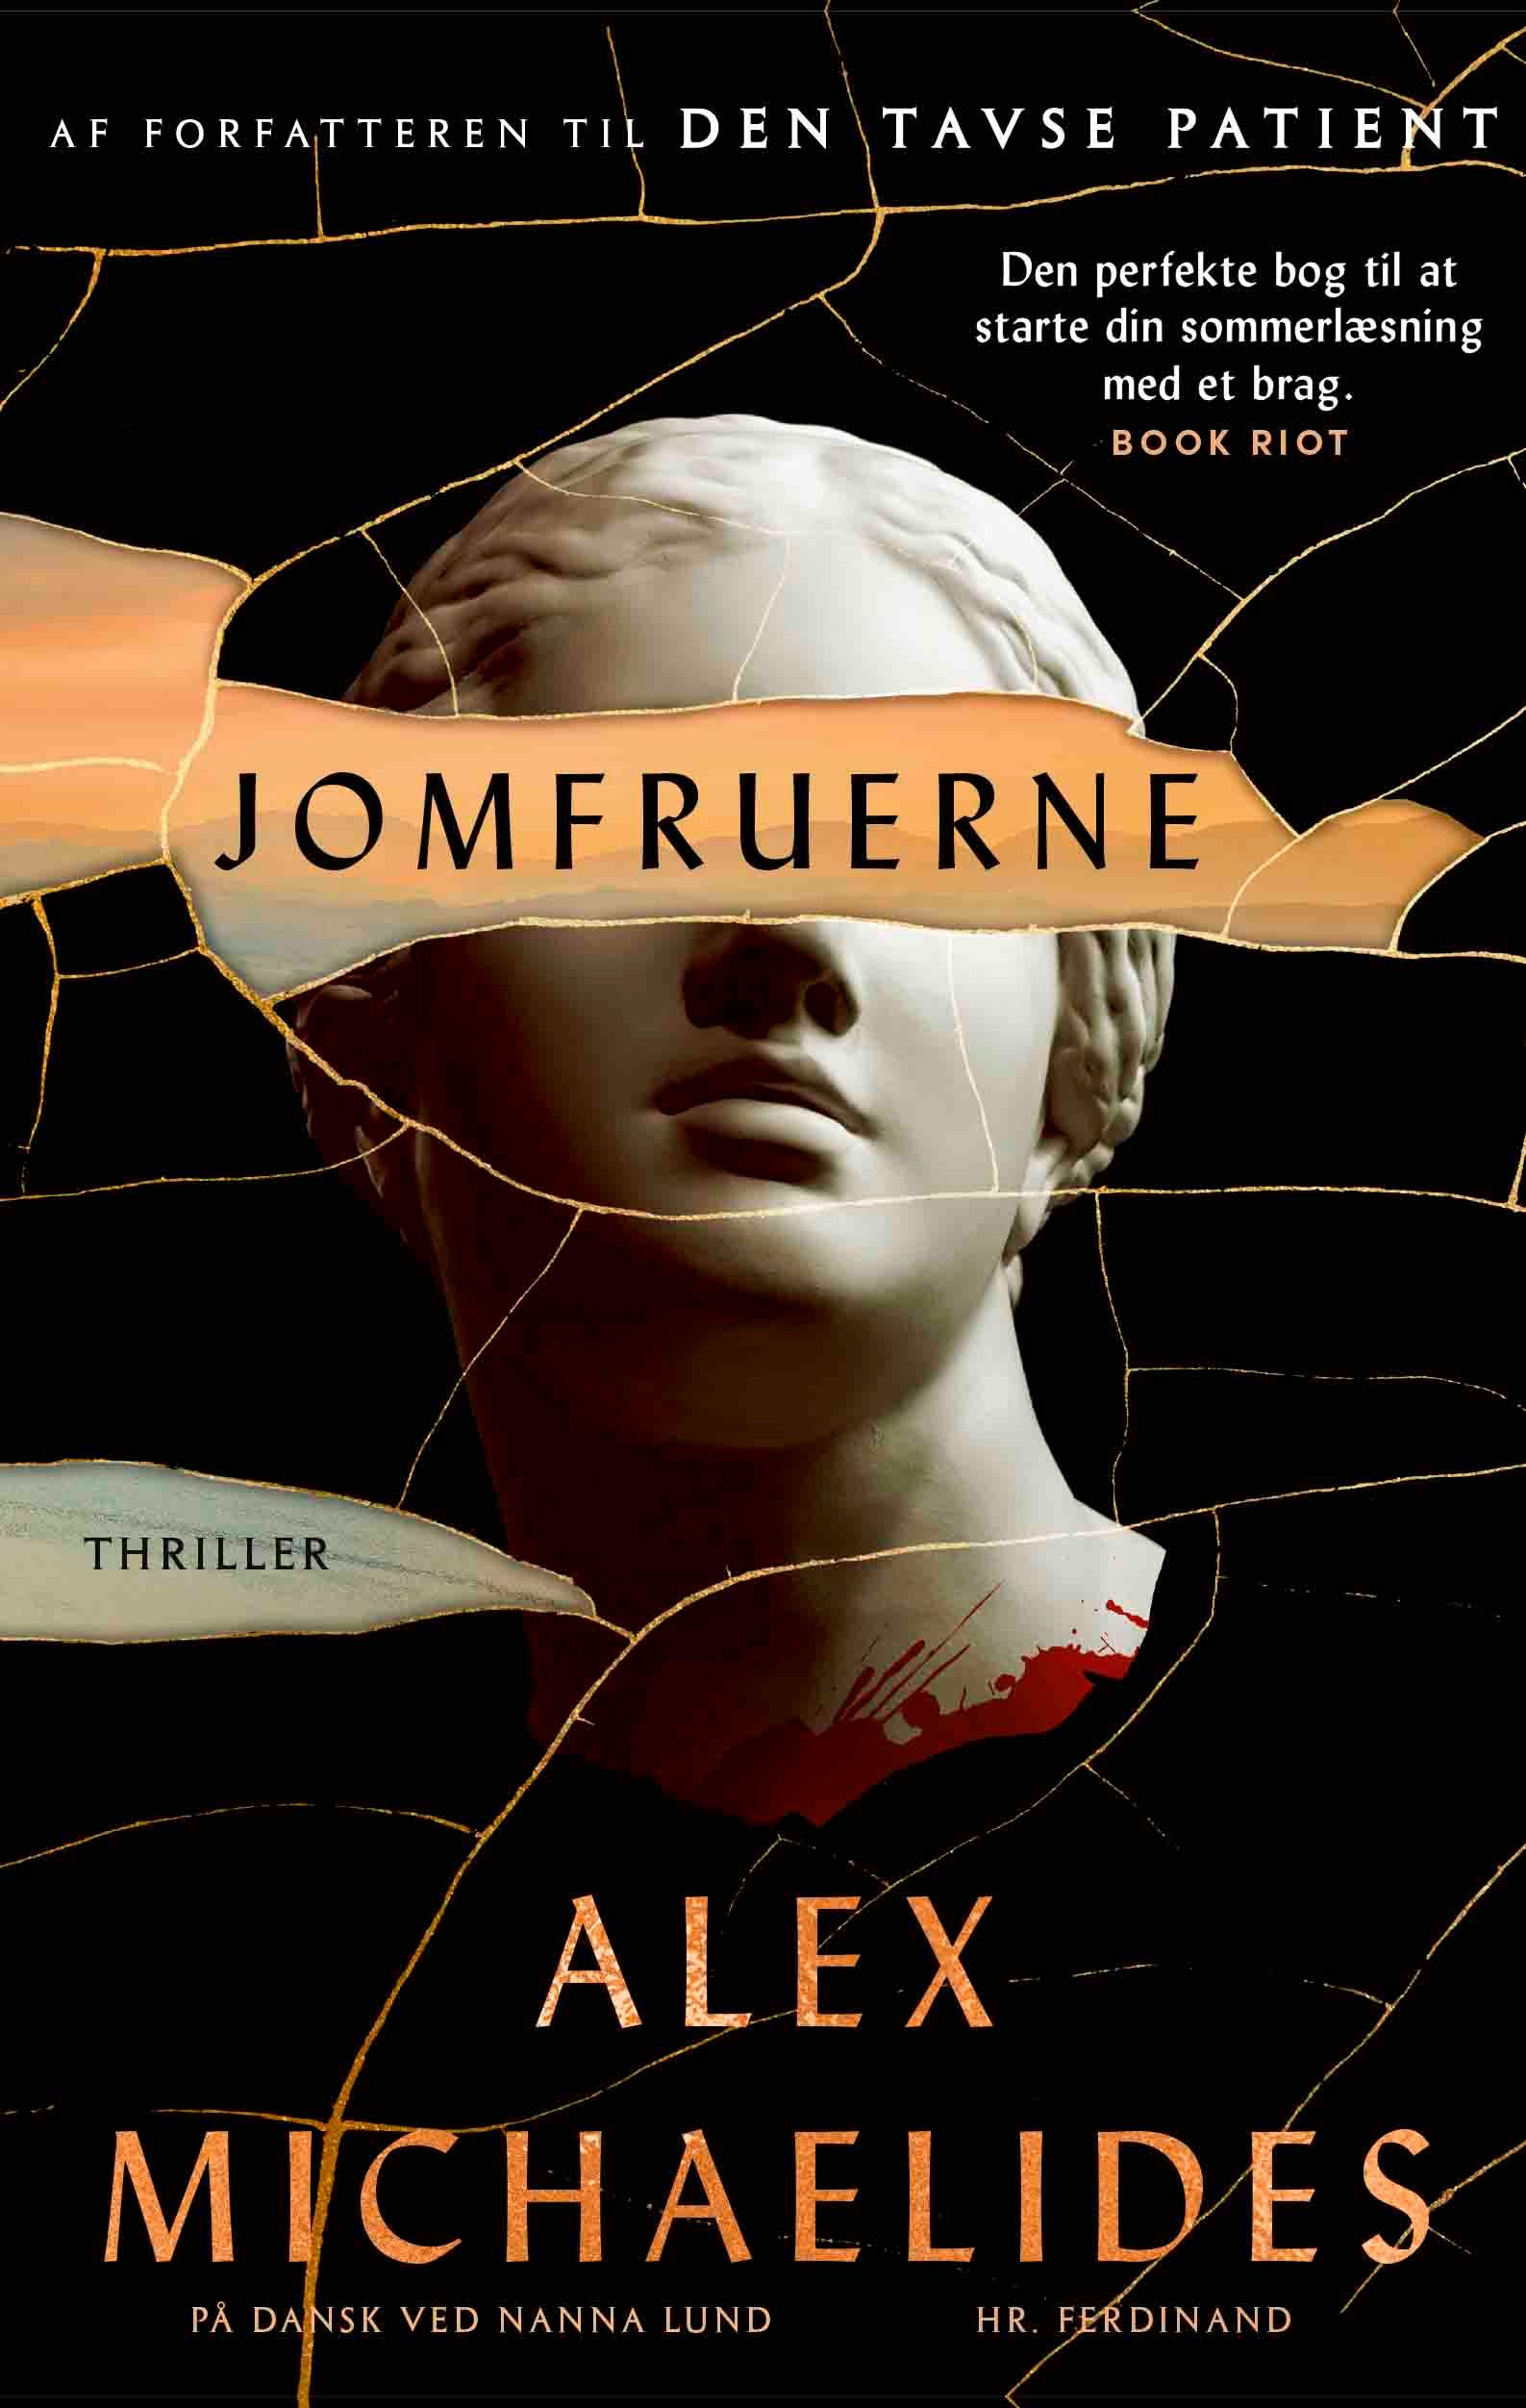 Jomfruerne, eBook by Alex Michaelides